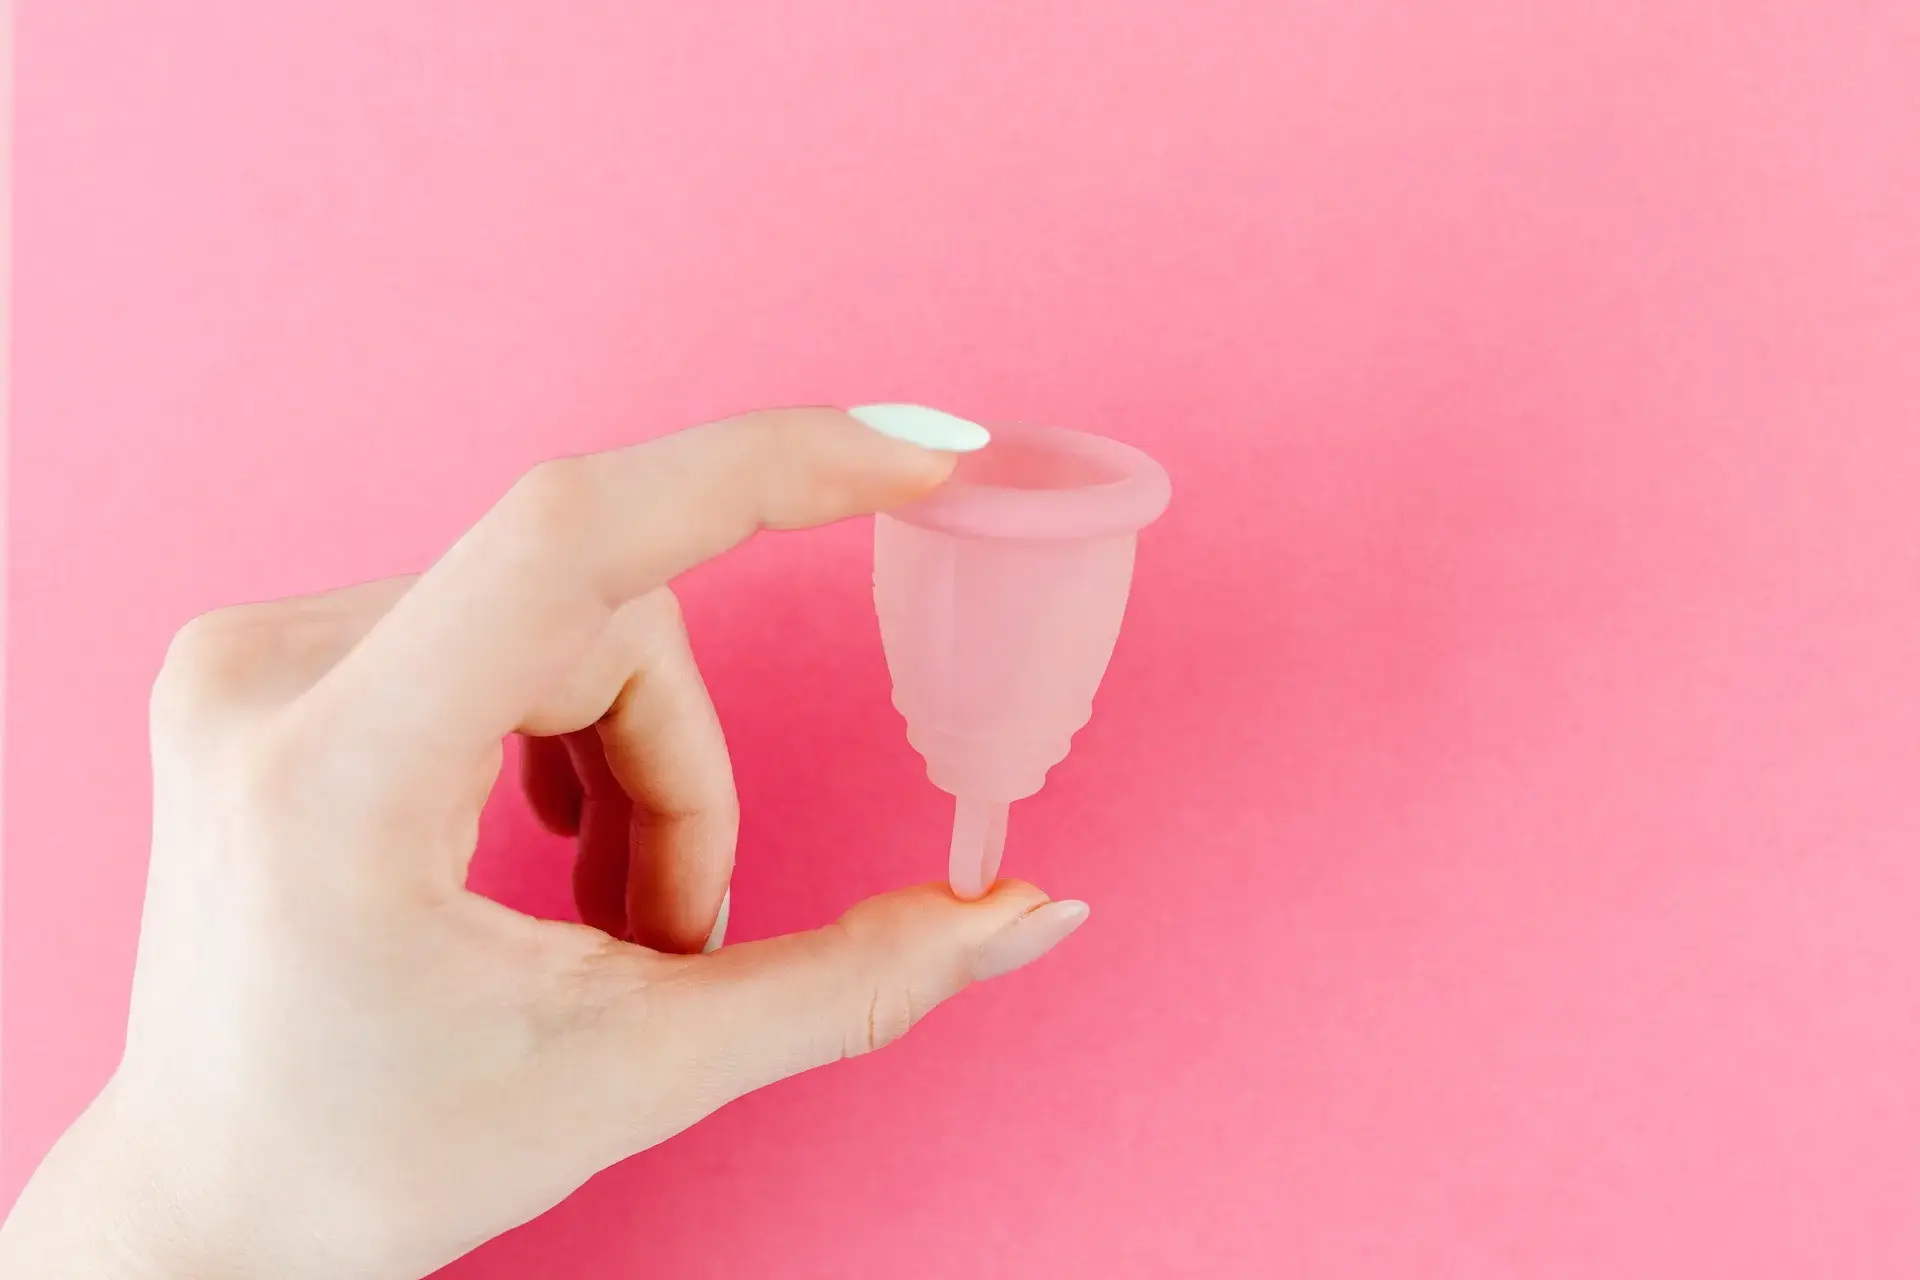 Menstrualna čašica (menstrual cup) - prednosti i iskustva žena